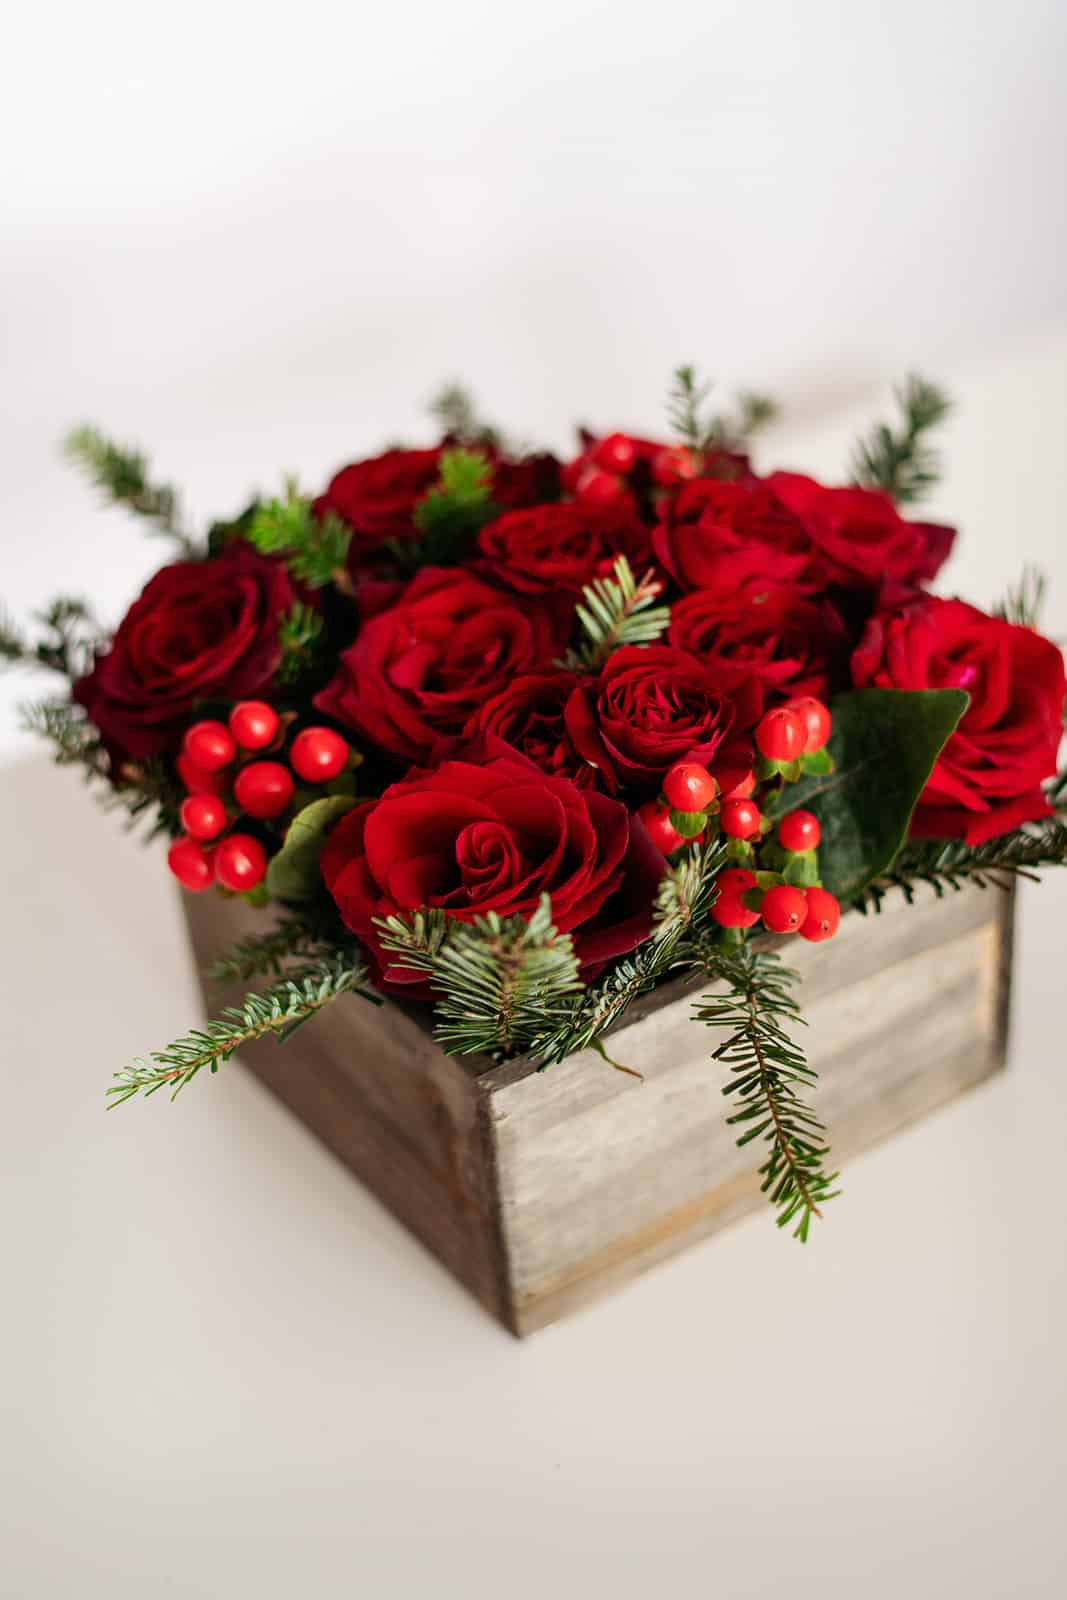 Red rose romance arrangement